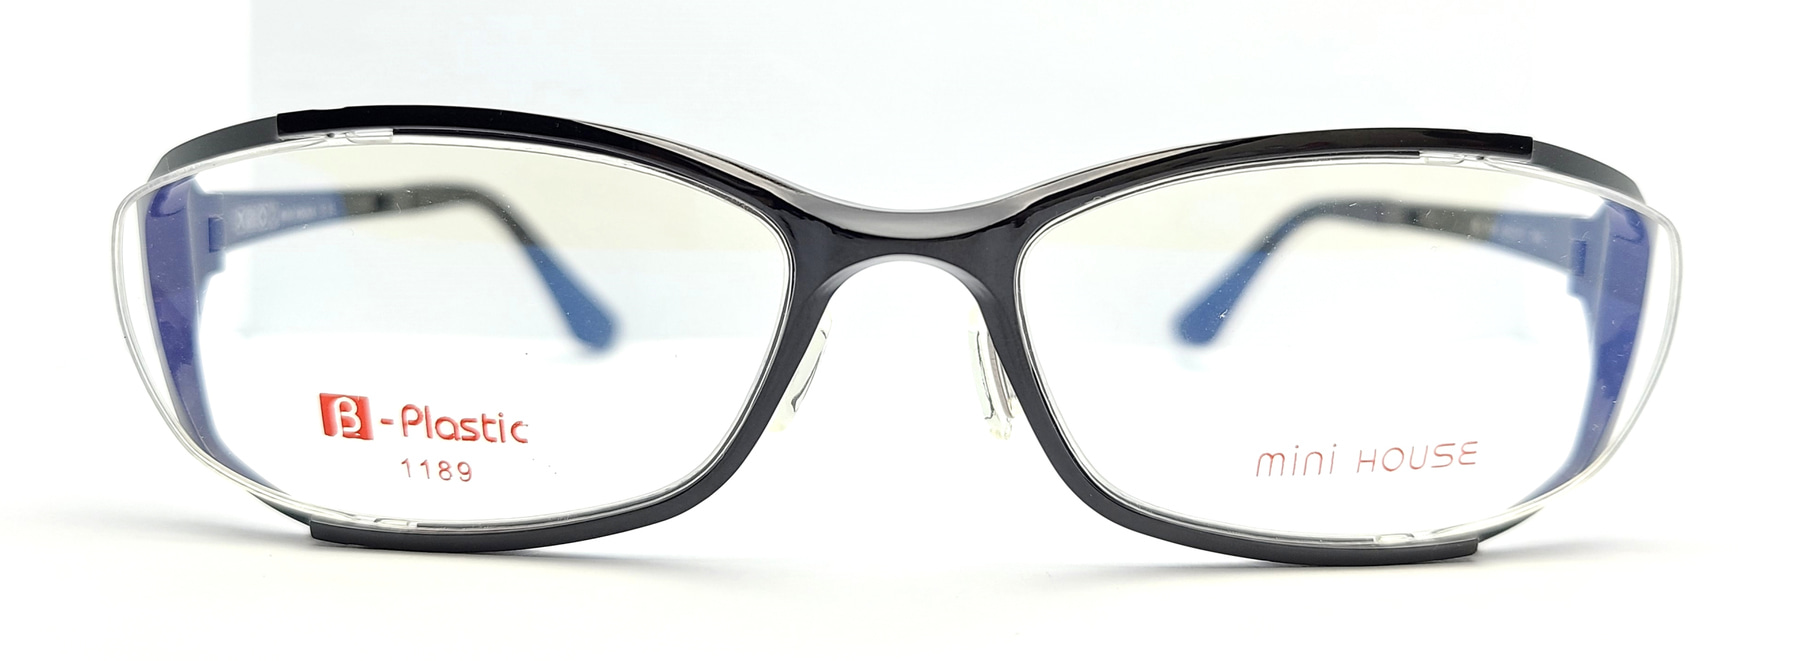 MINIHOUSE M-1189, Korean glasses, sunglasses, eyeglasses, glasses